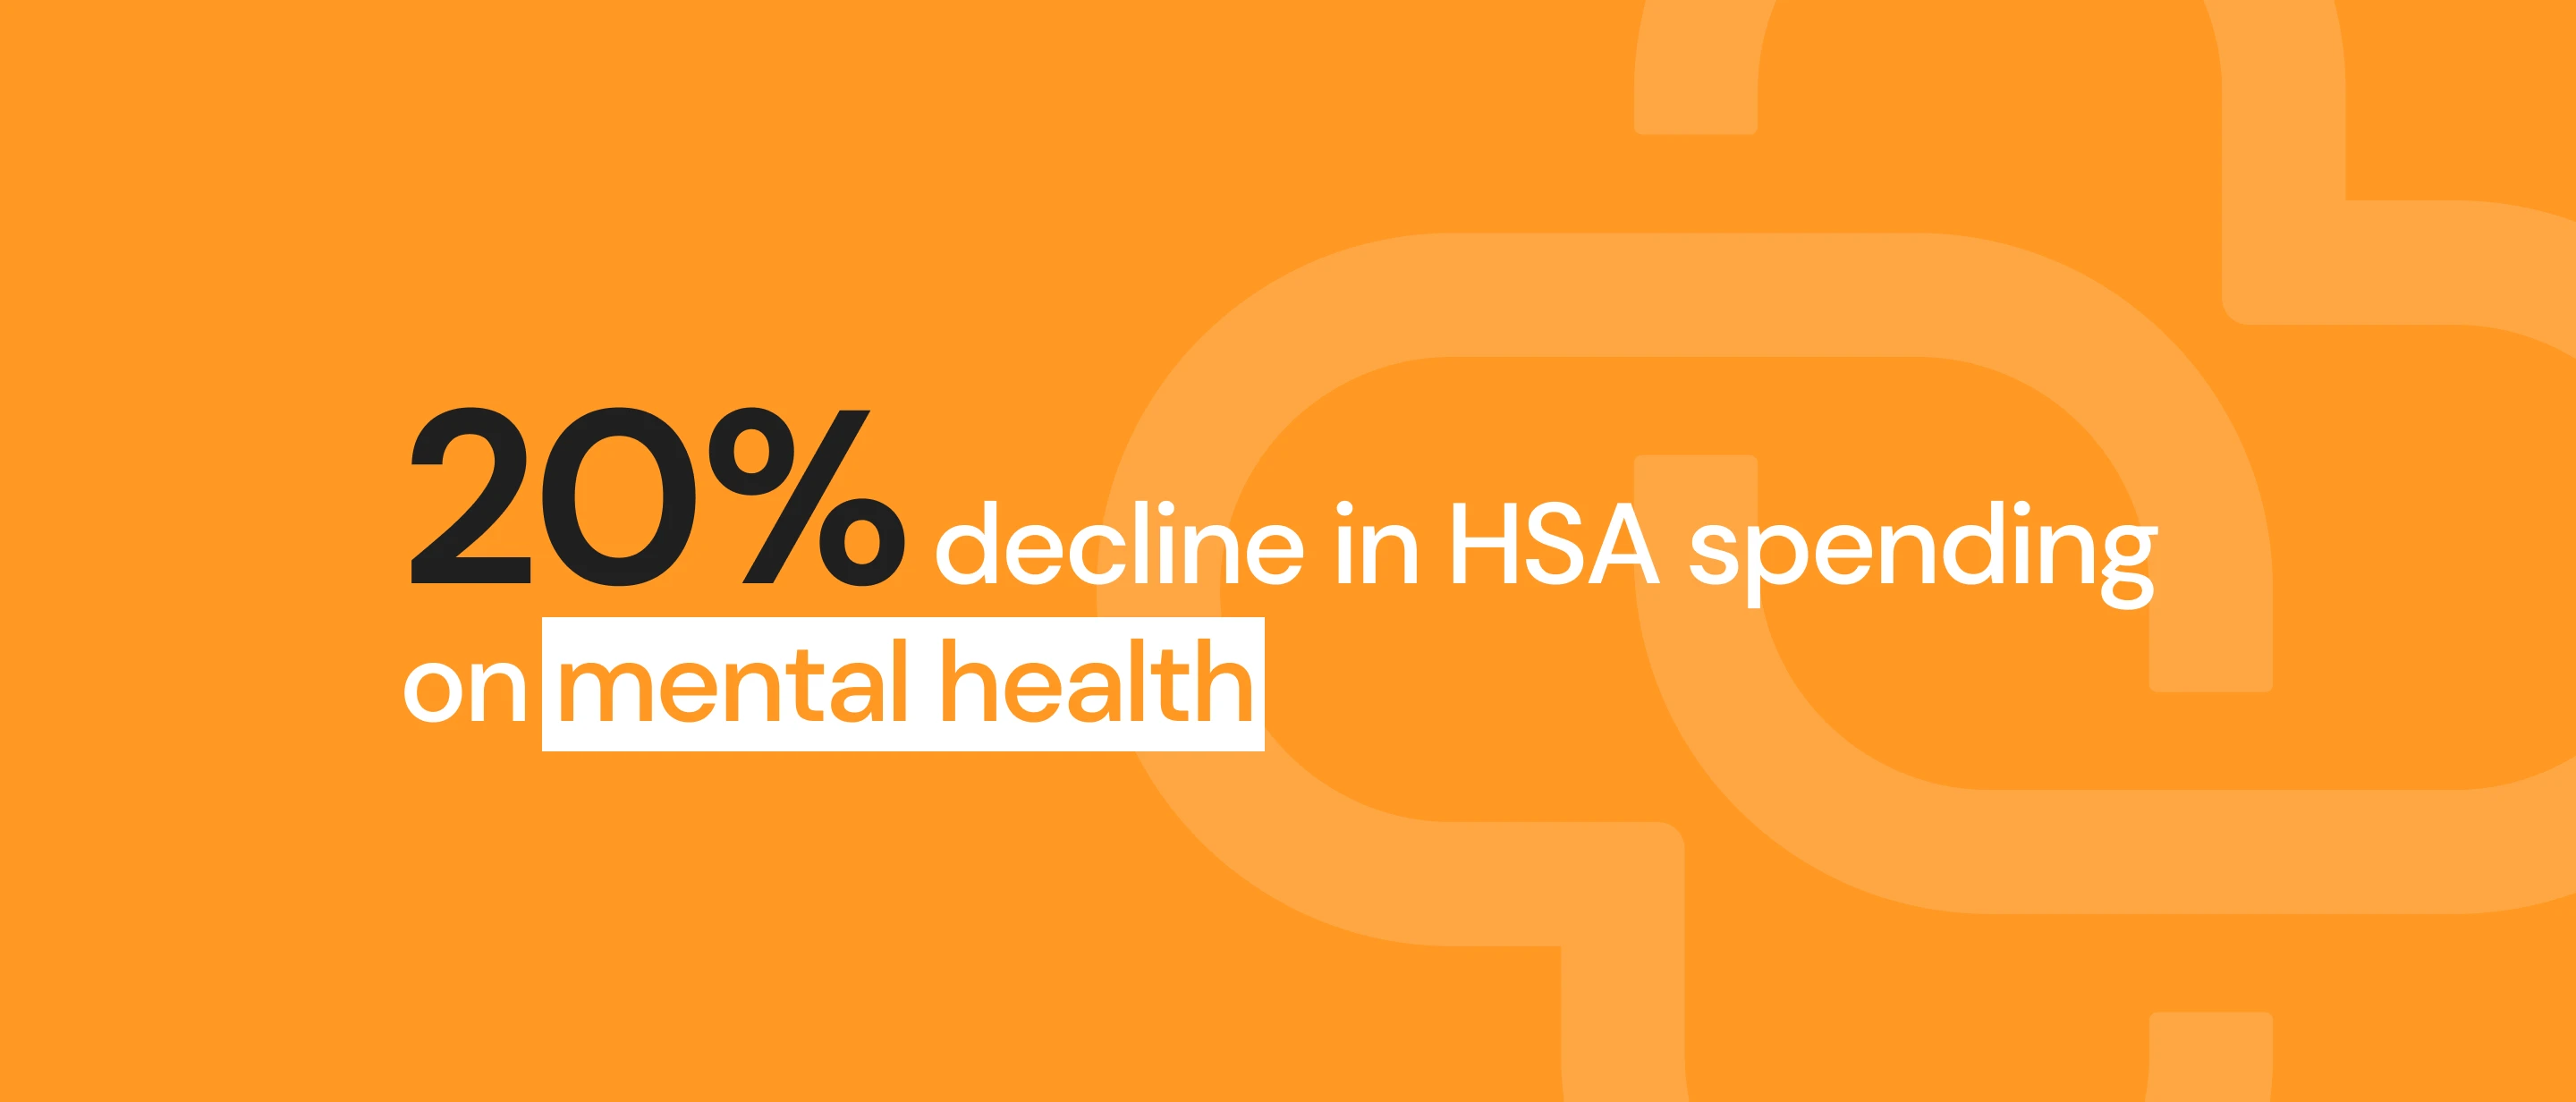 Blog HSA Snapsnot Report Images - Mental health spending